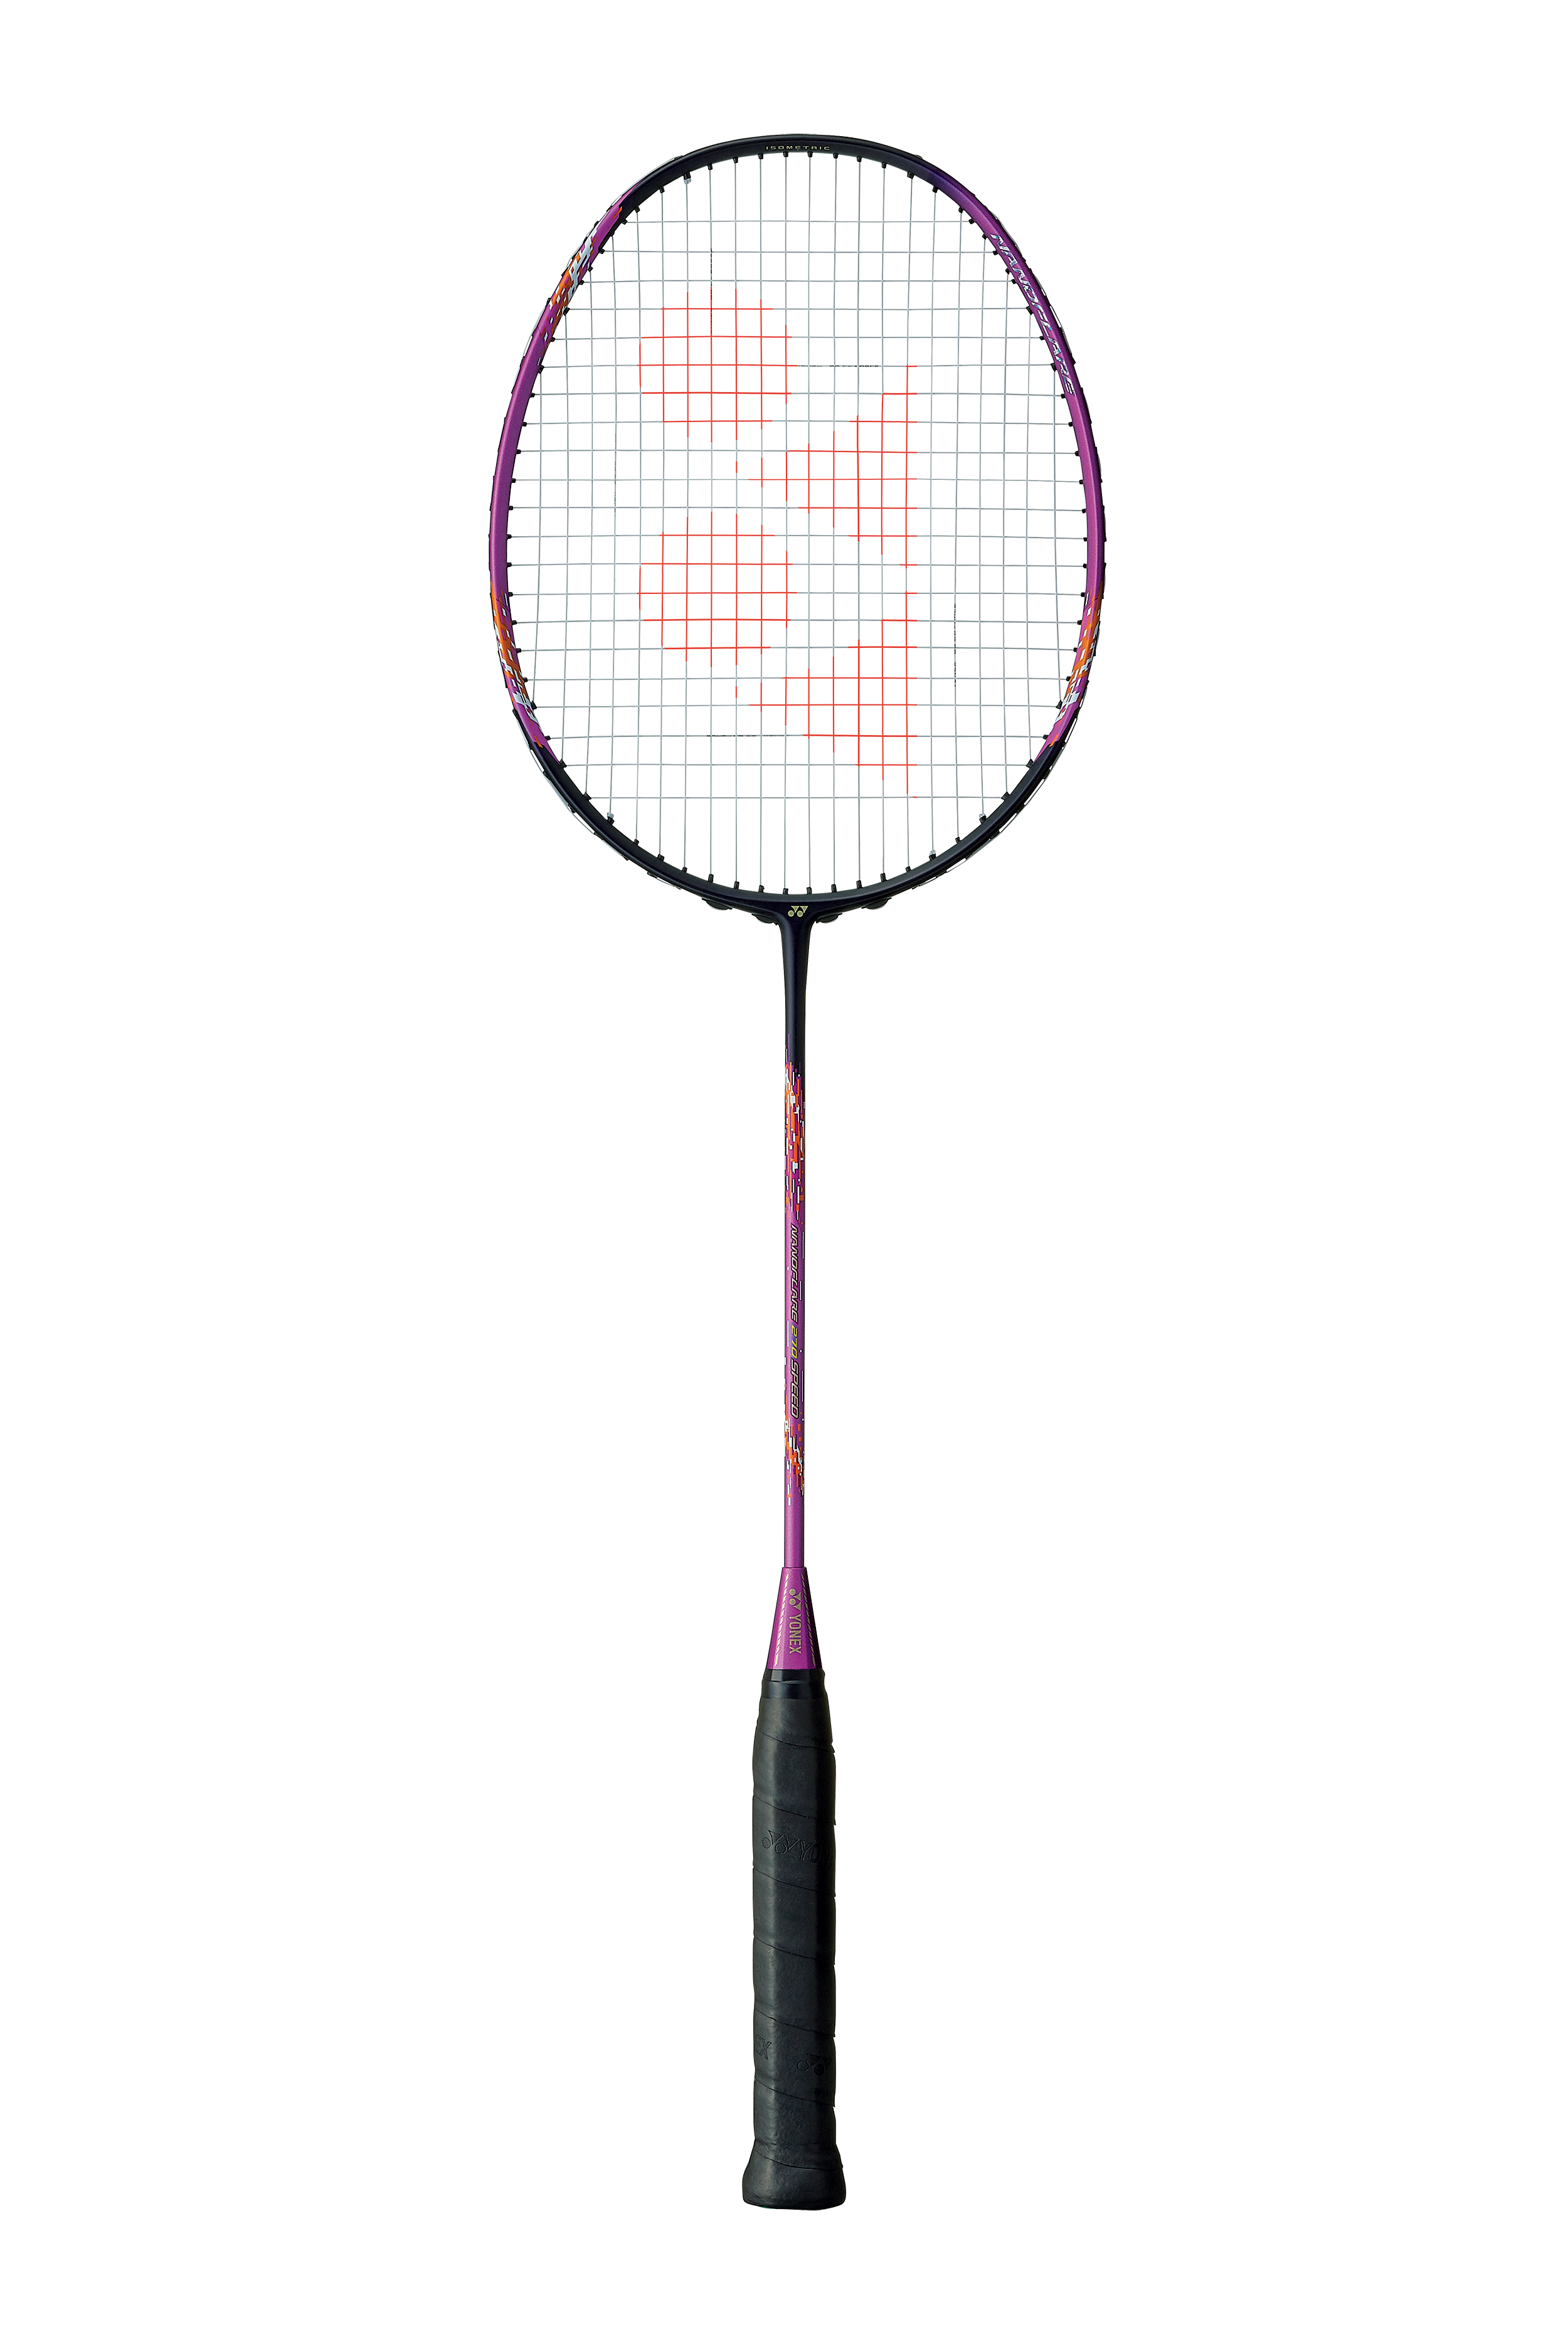 YONEX Badminton Racquet - NANOFLARE 270 SPEED - Purple Color - 5U5 - Pre-strung